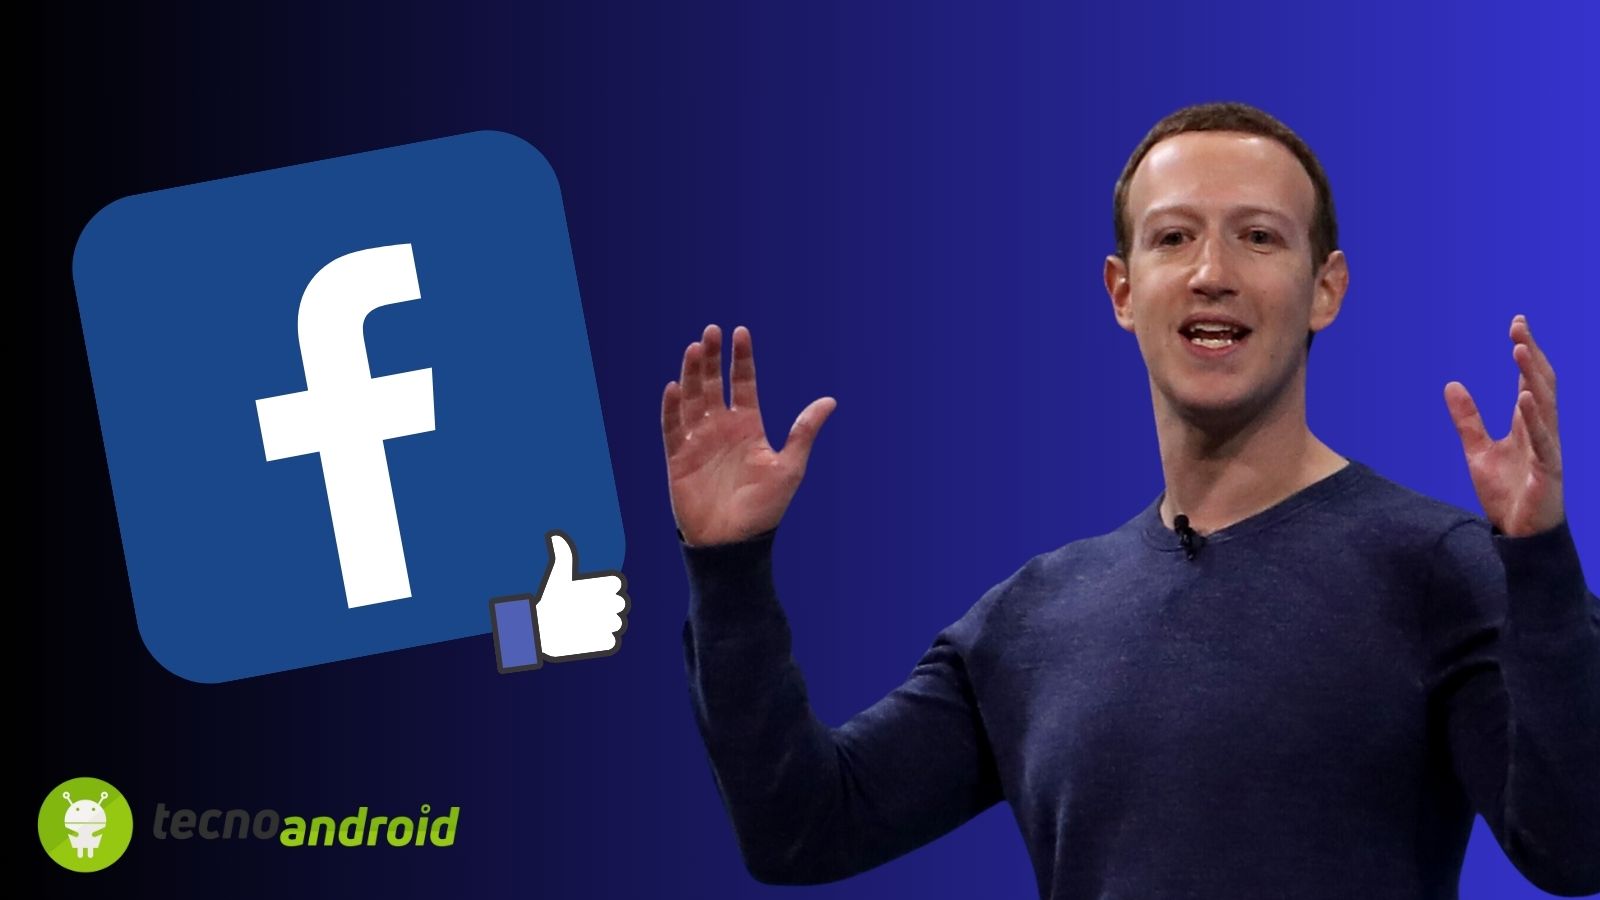 Facebook: abbonamento a 12,99 euro per l'utilizzo del social